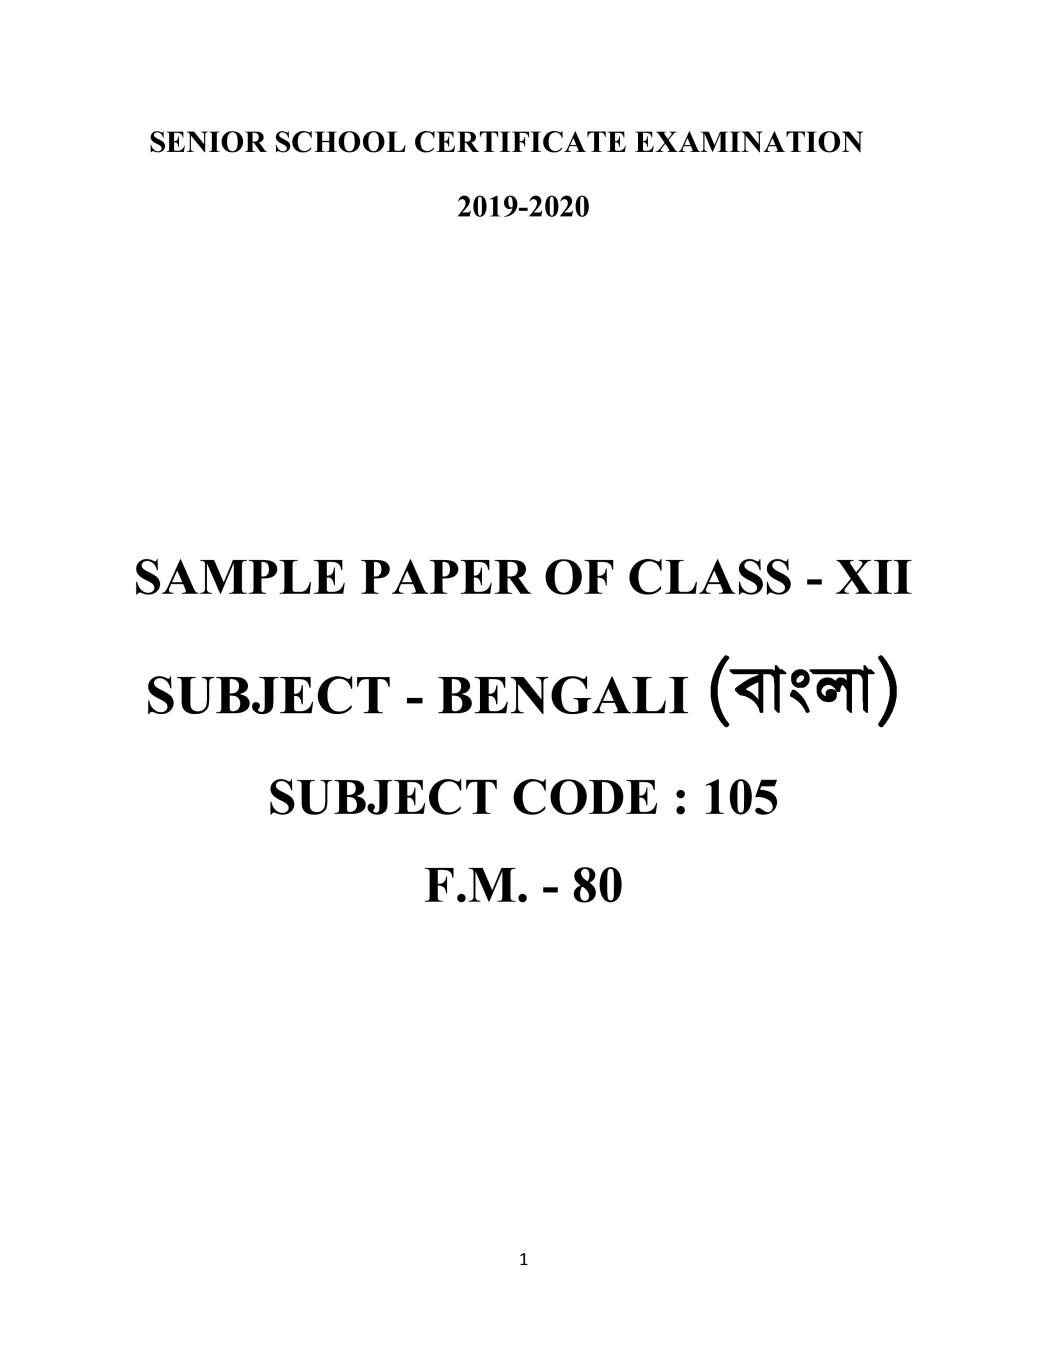 bangla term paper pdf